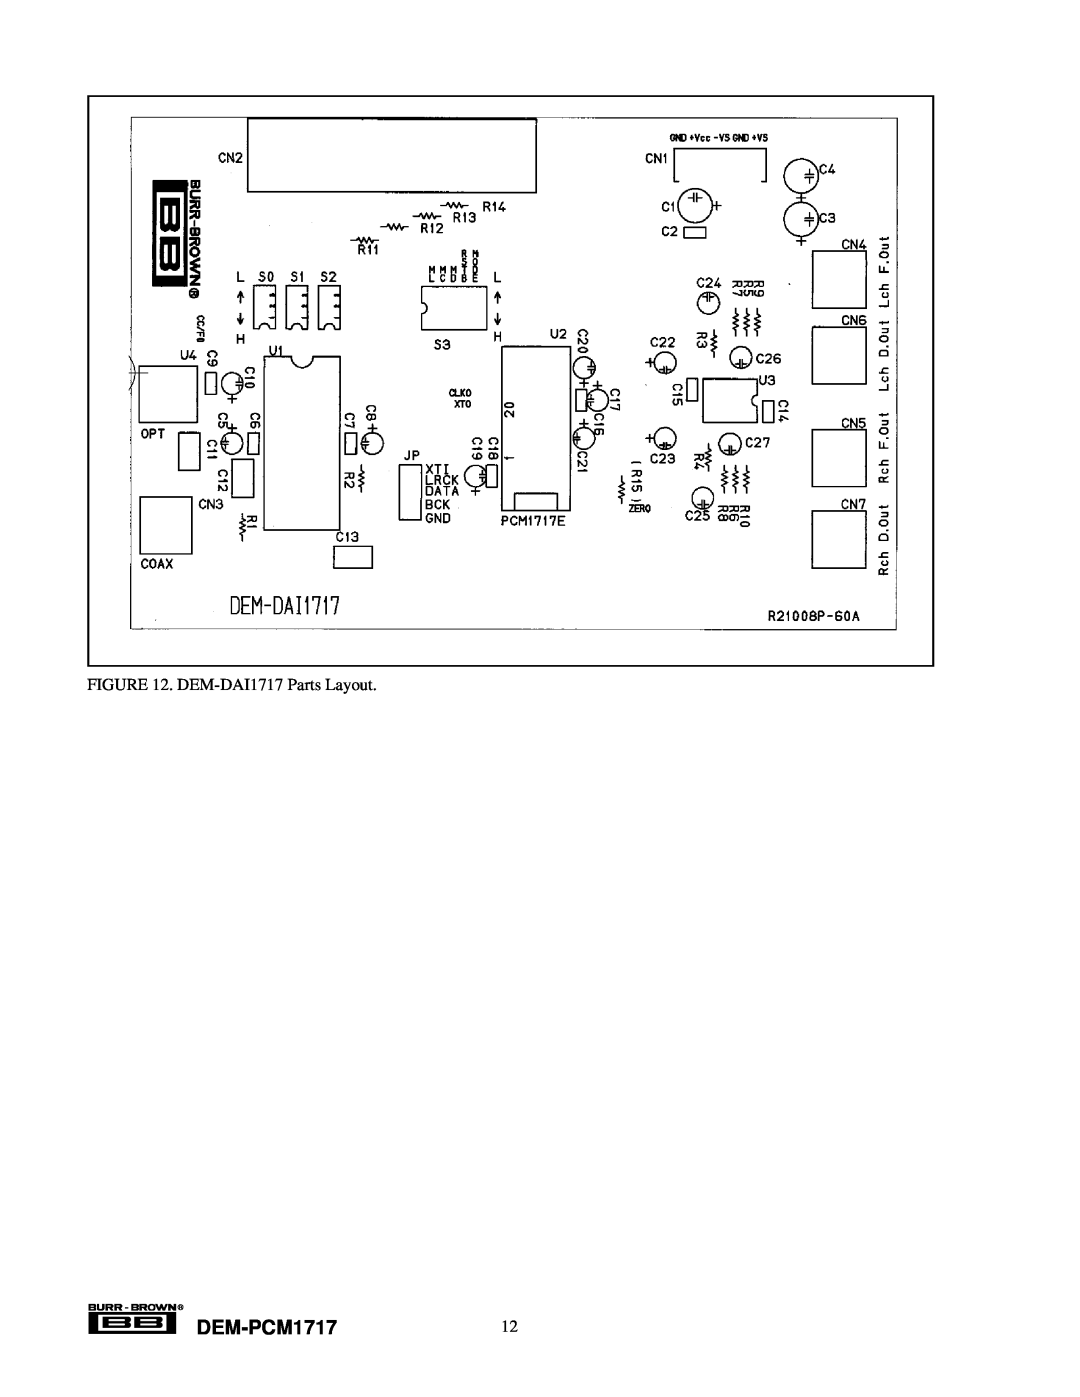 Texas Instruments manual DEM-PCM171712, DEM-DAI1717Parts Layout 